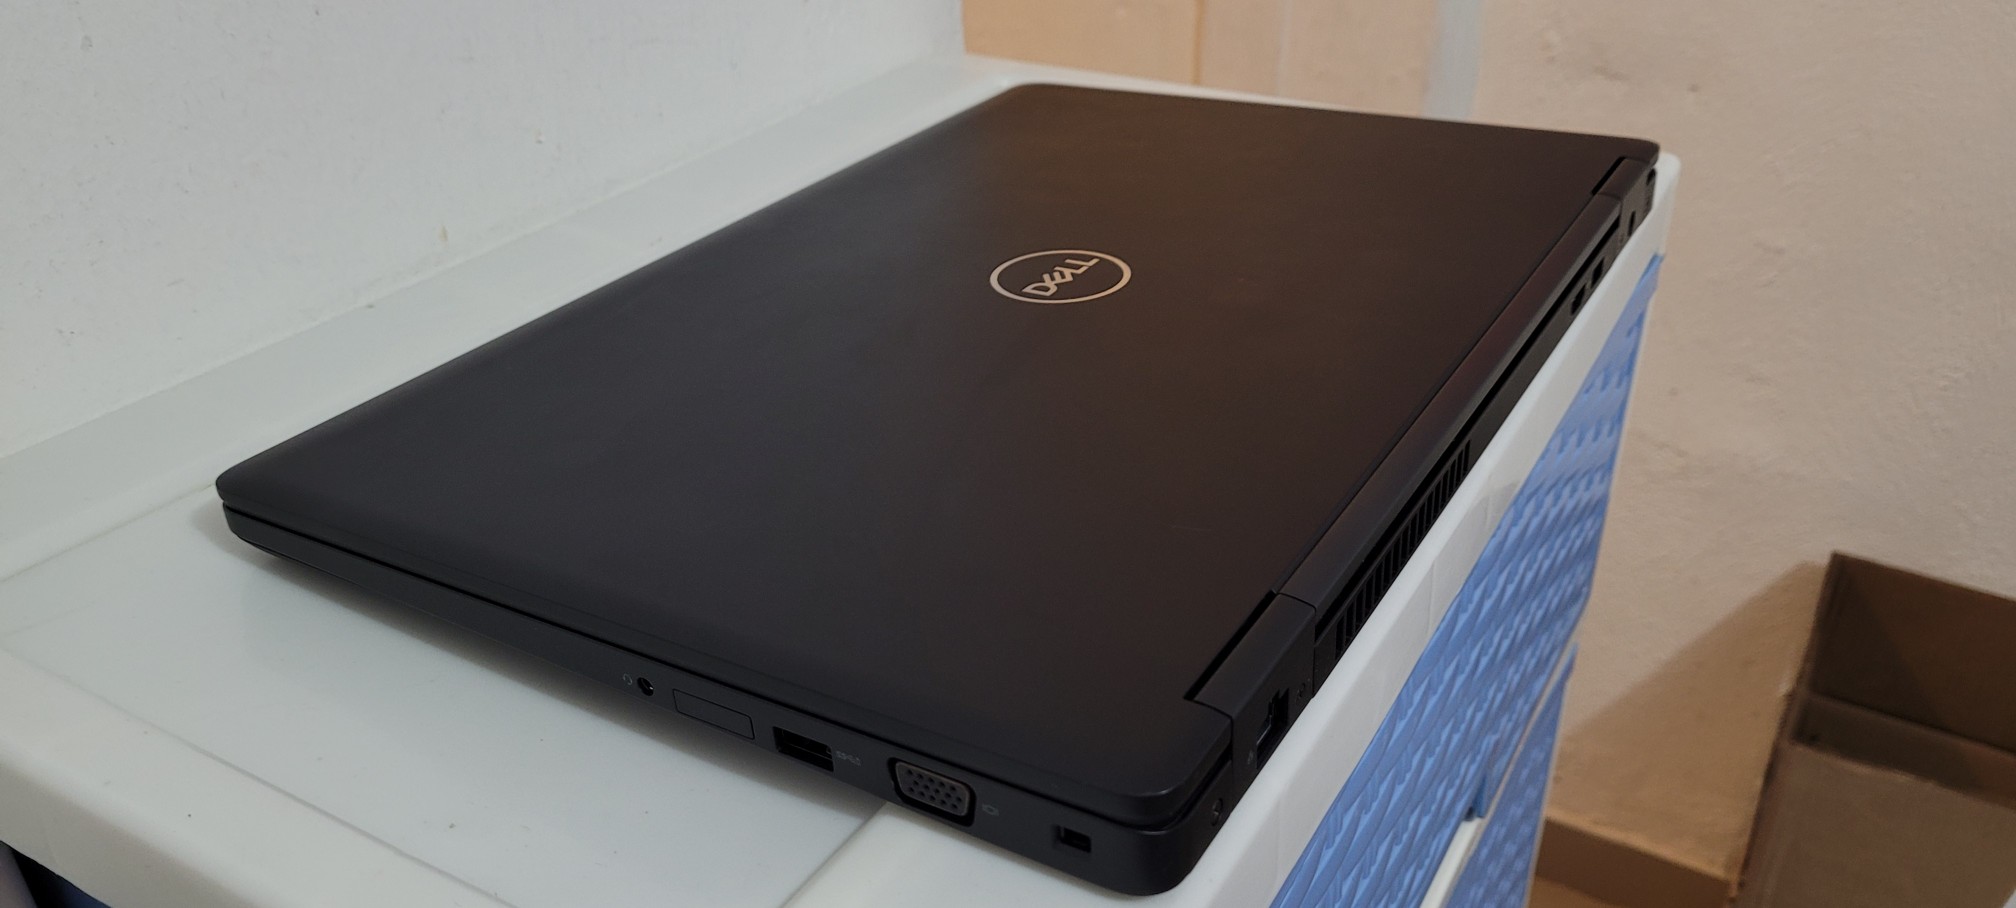 computadoras y laptops - Laptop Dell 5570 17 Pulg Core i7 6ta Gen Ram 16gb Disco 256gb Aty Radeon R7 2gb 2